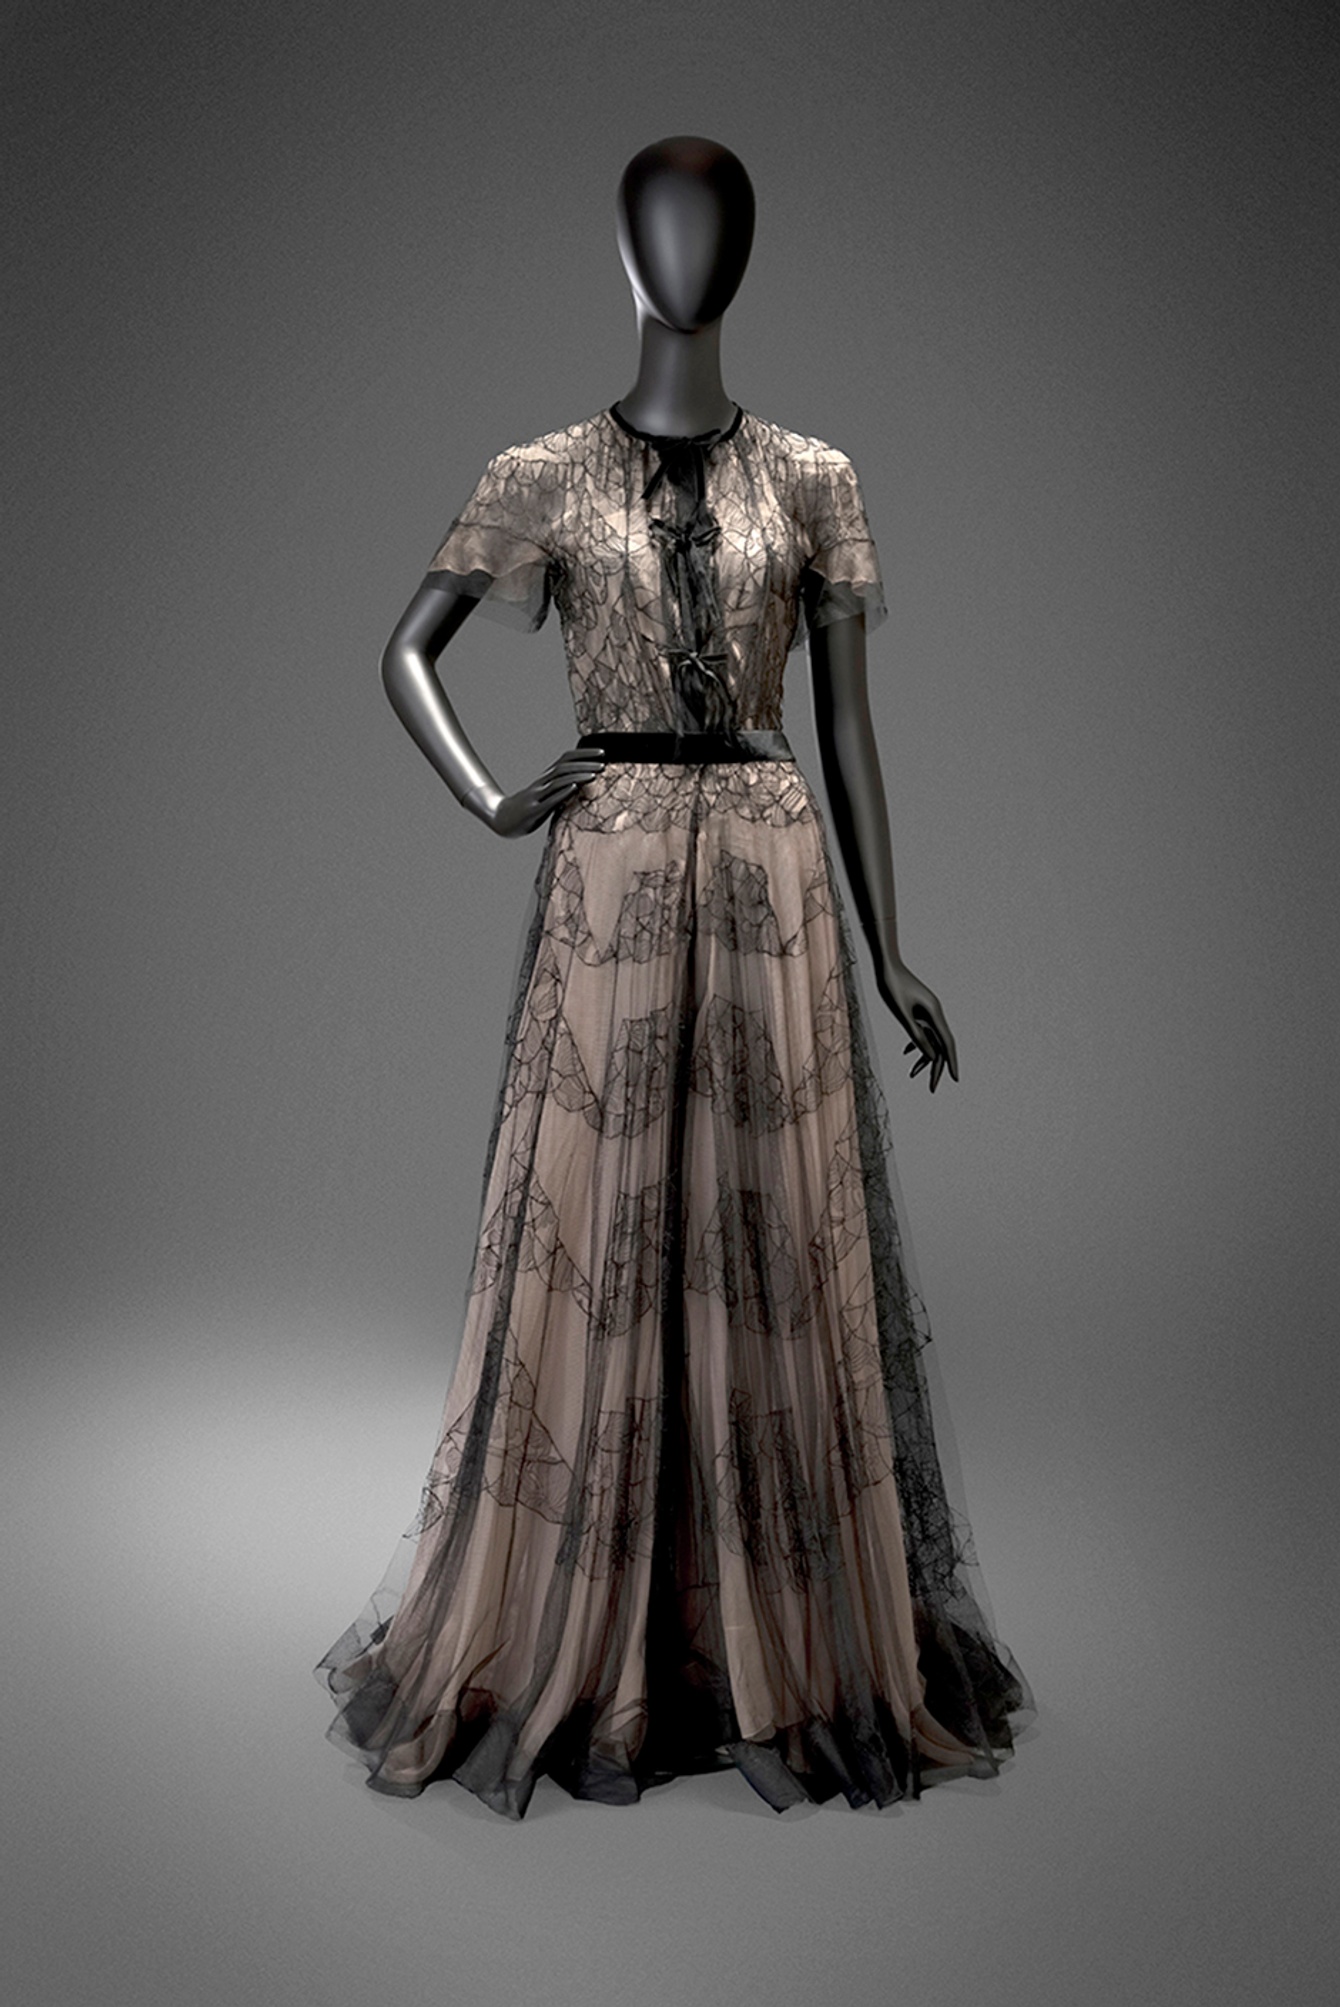 Kreunt pedaal Occlusie Glamour 30's Fashion expo: mode in de jaren 1930 | BRUZZ